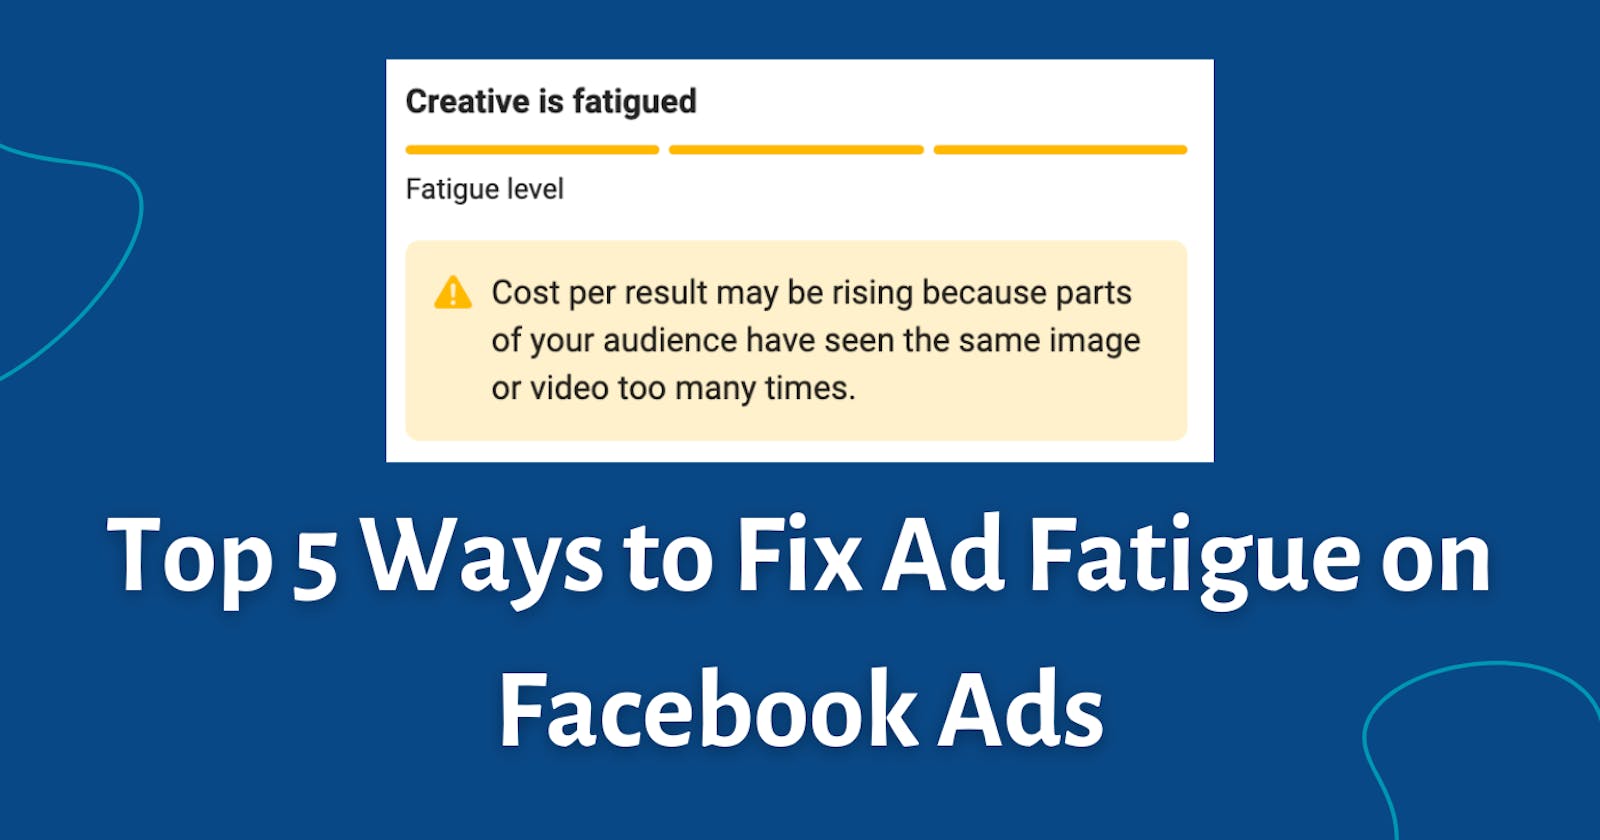 Creative Fatigue - 5 Ways to Fix Ad Fatigue on Facebook Ads